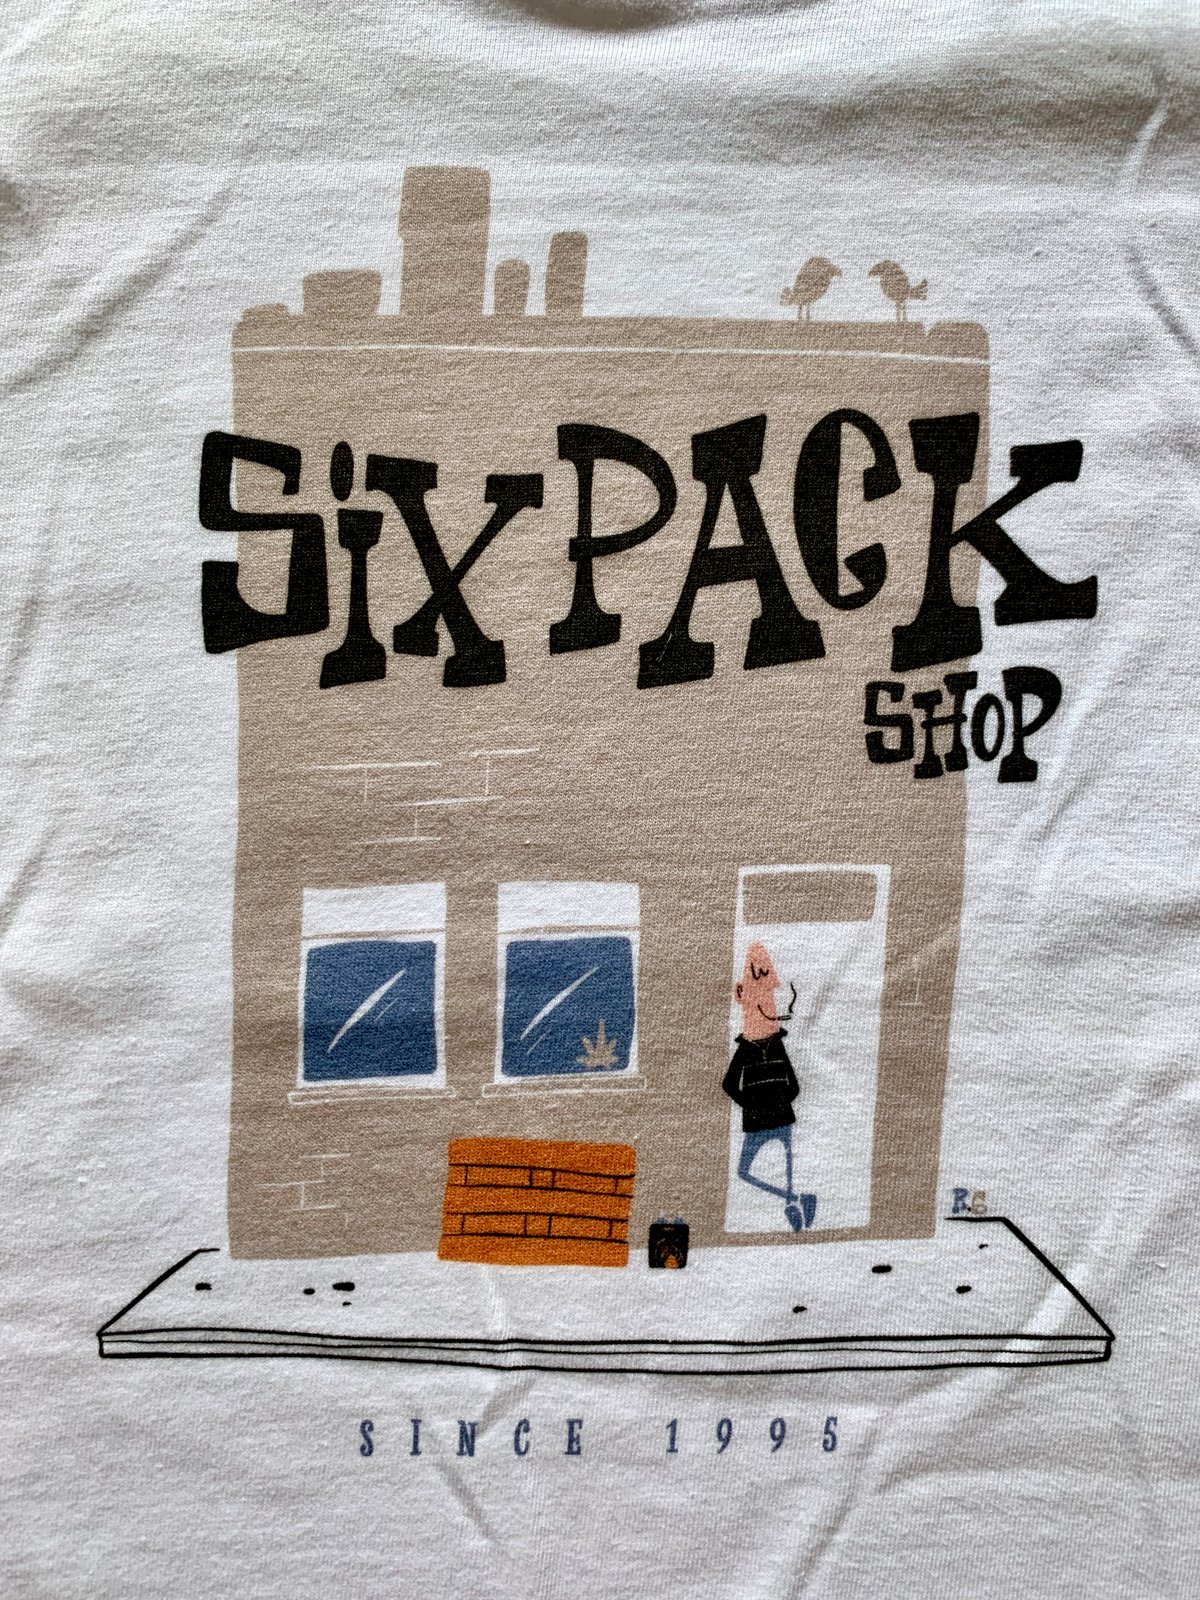 Image of ''Sixpack Shop'' Kids T-Shirt